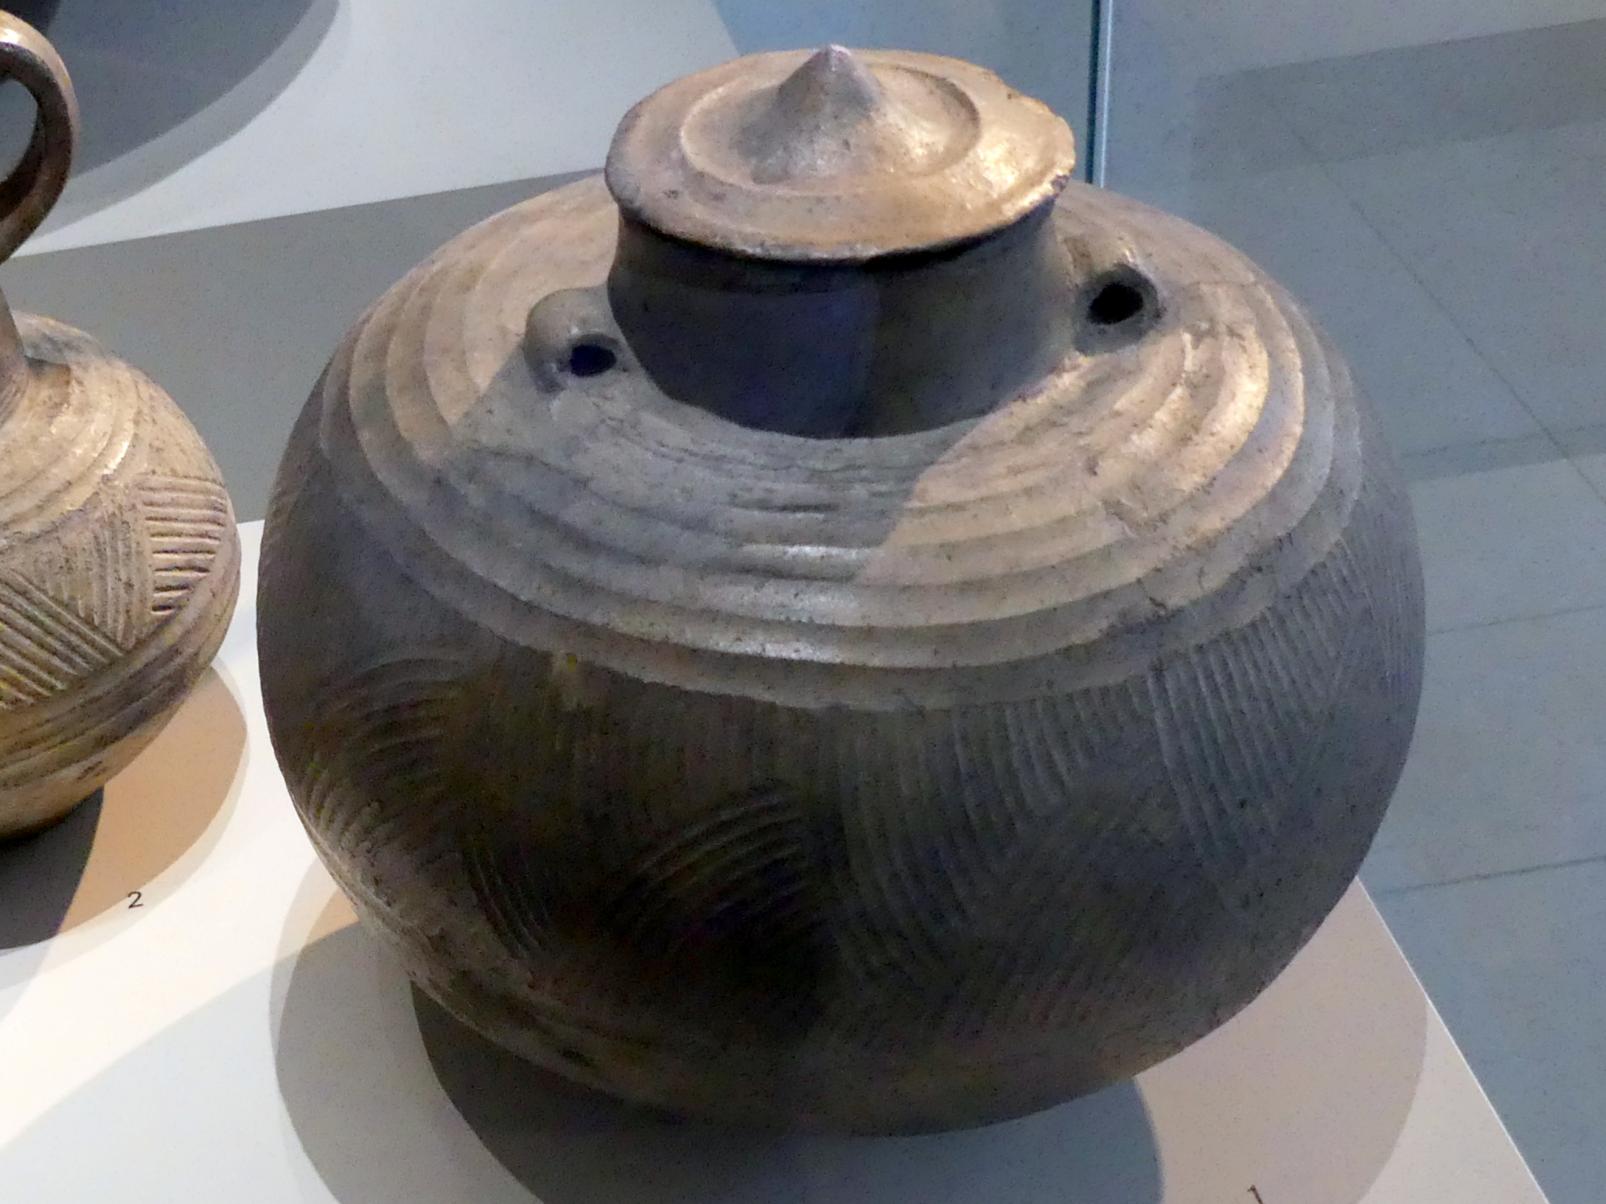 Topf mit Deckel, 900 - 600 v. Chr.